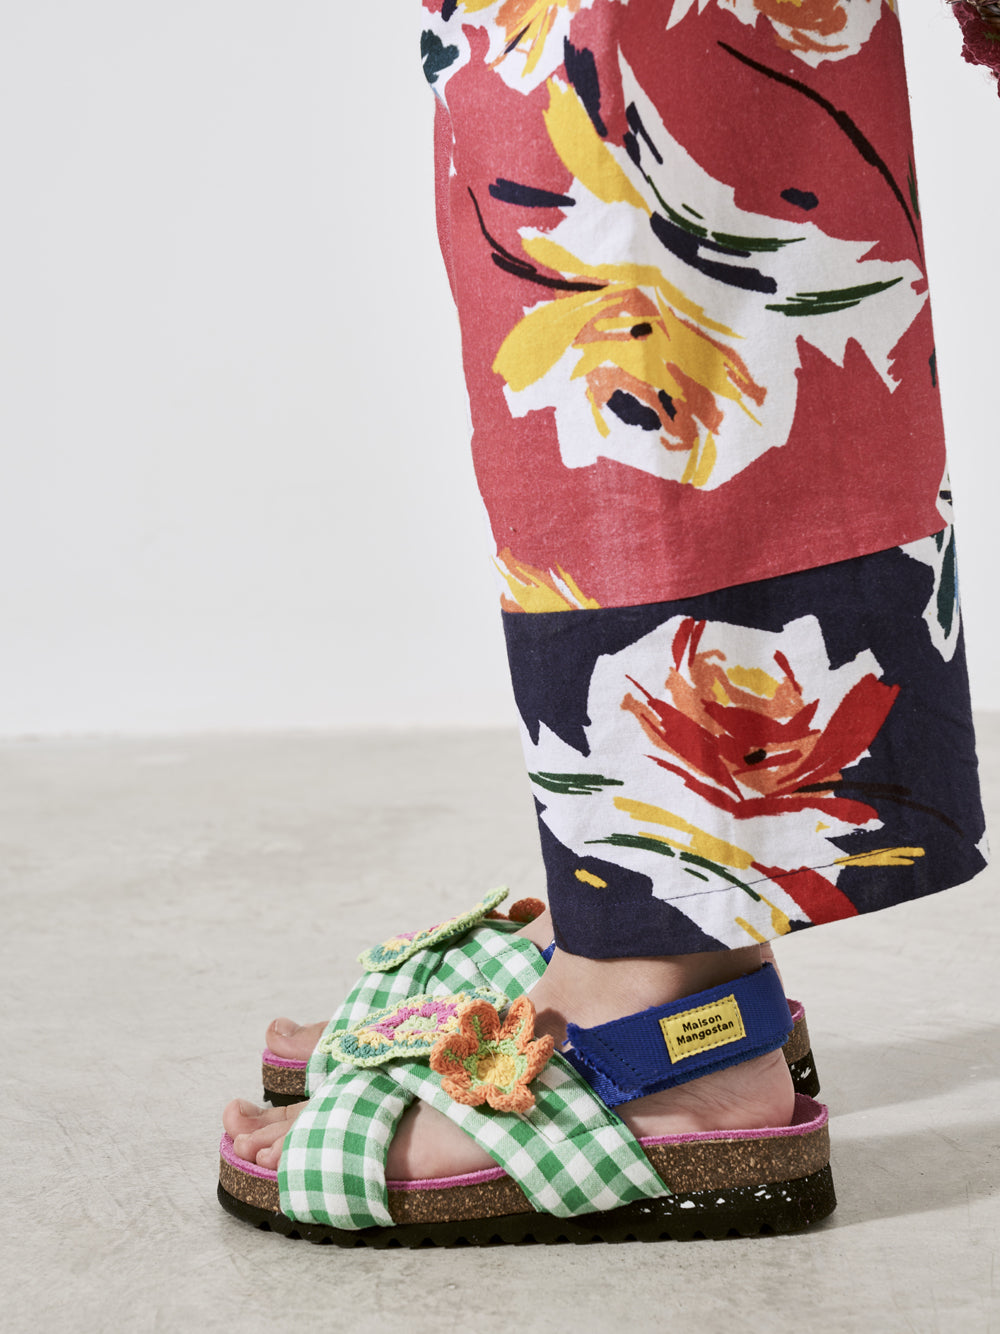 PREORDER: Peladillo Flower Sandals